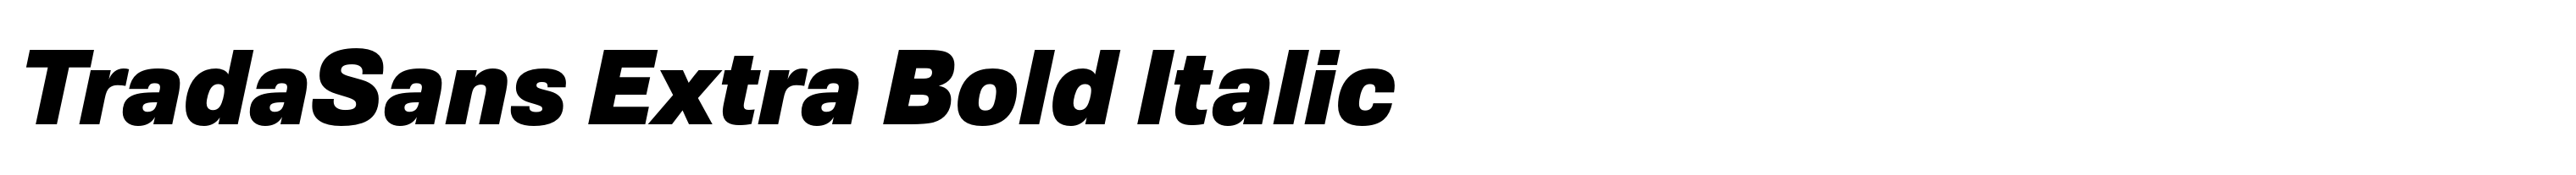 TradaSans Extra Bold Italic